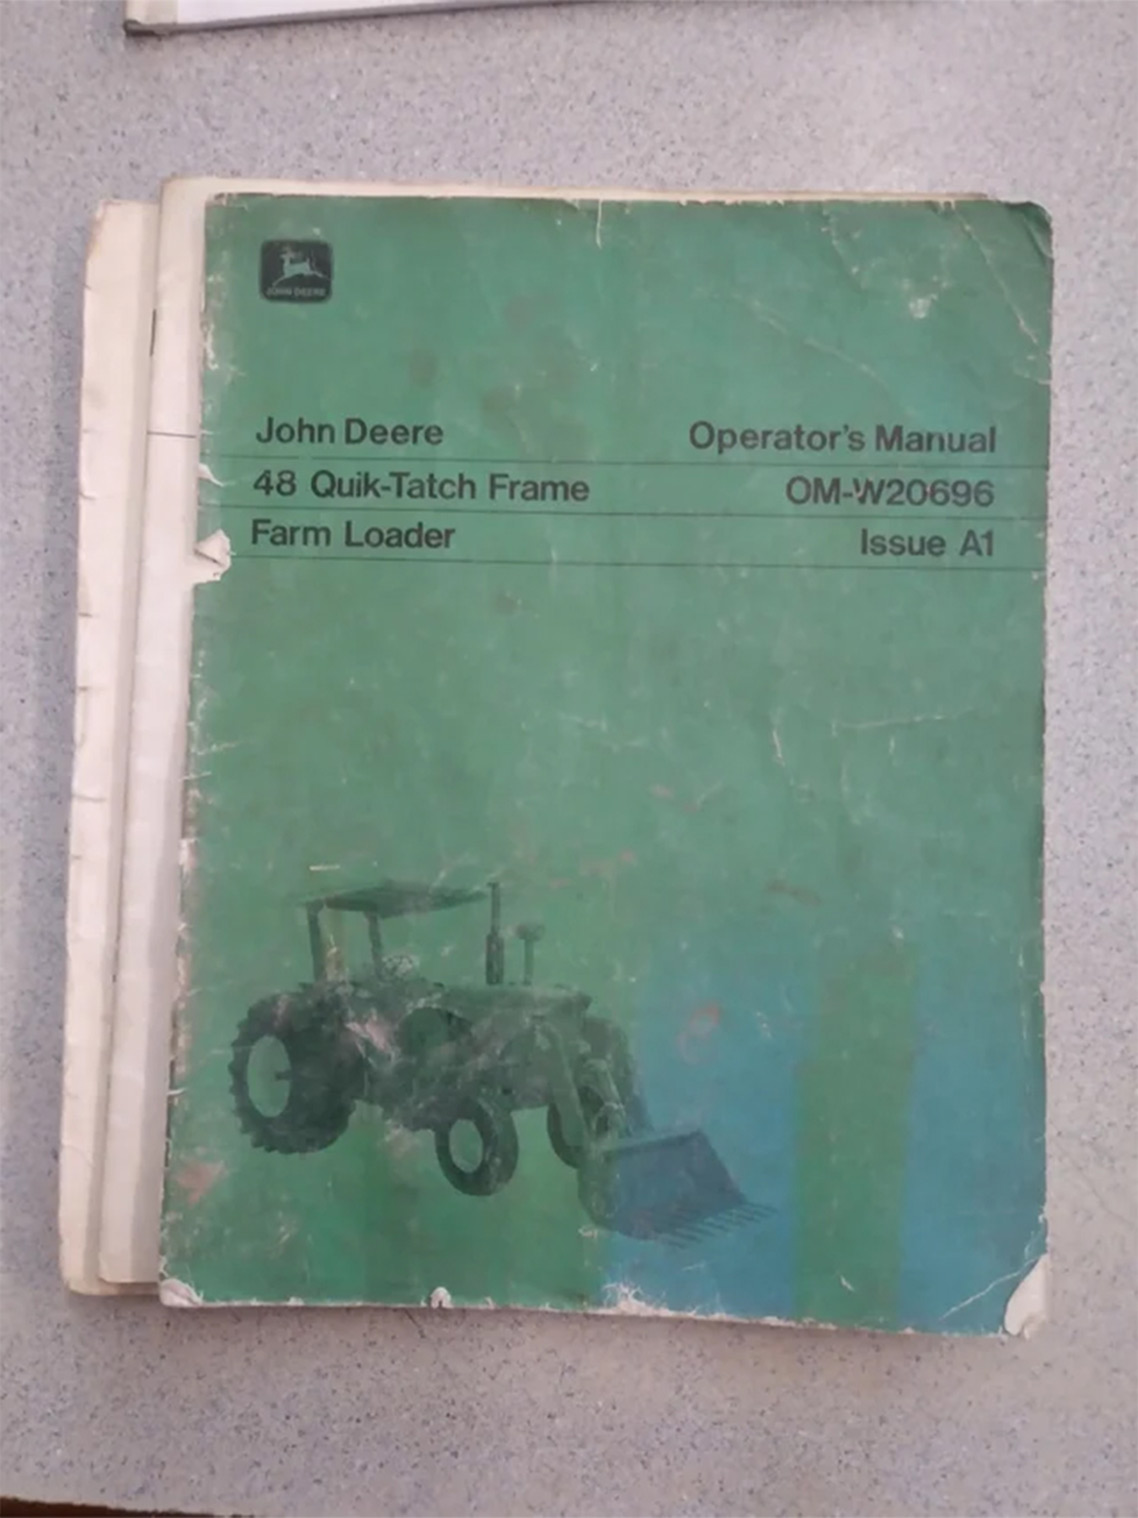 John Deere 48 Quik-Tatch Frame Operator's Manual